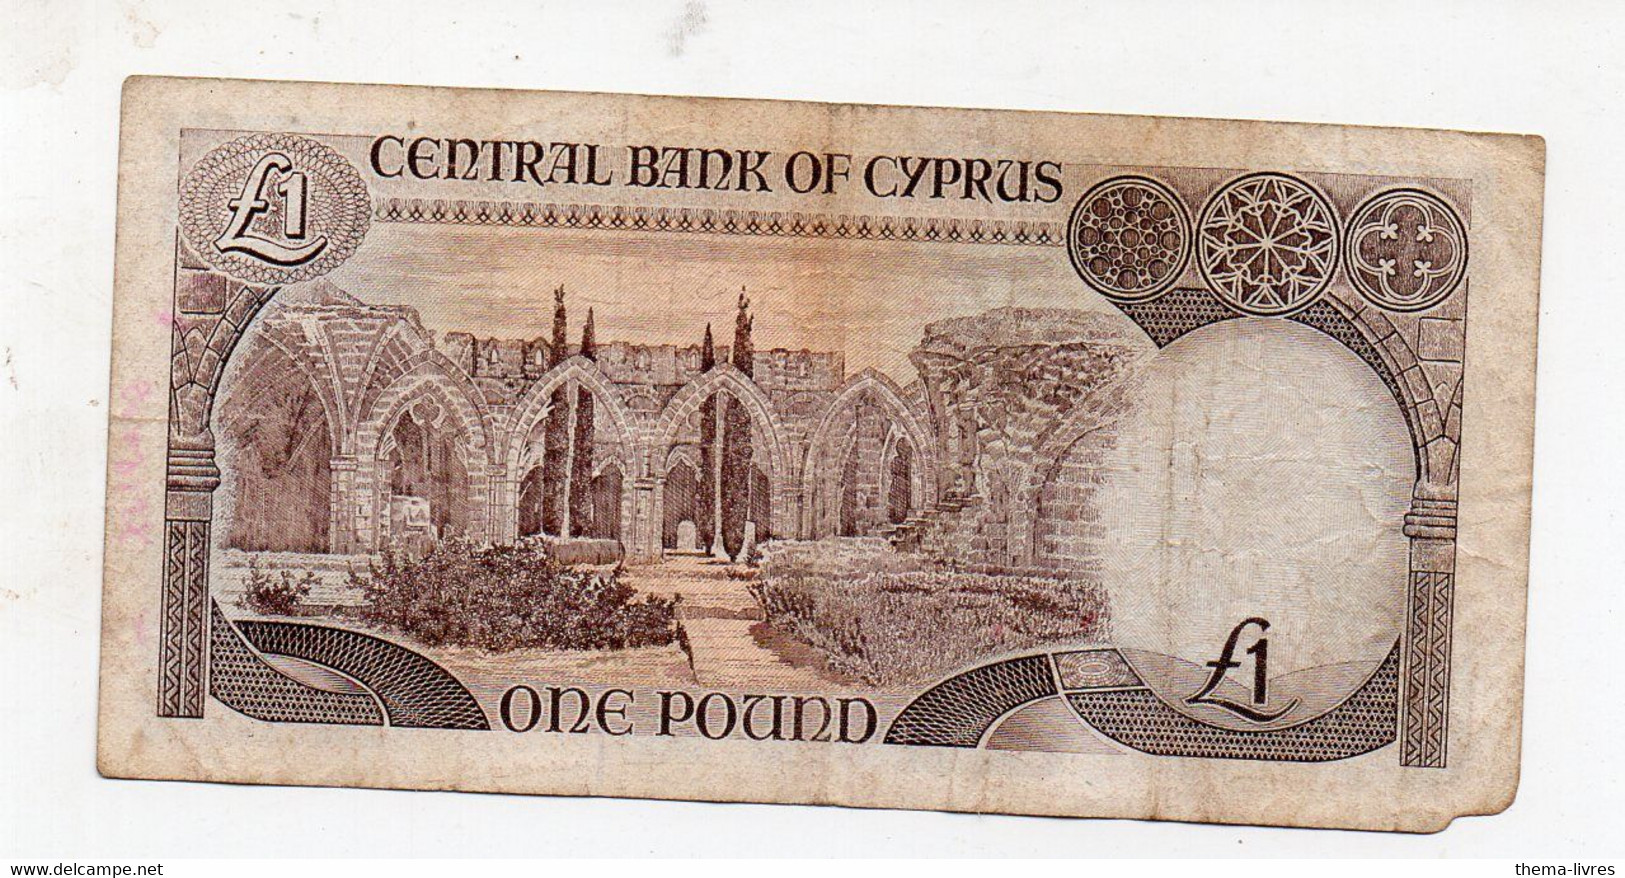 Cyprus / Chypre : Billet De One Pound 1992  (PPP35008) - Cyprus